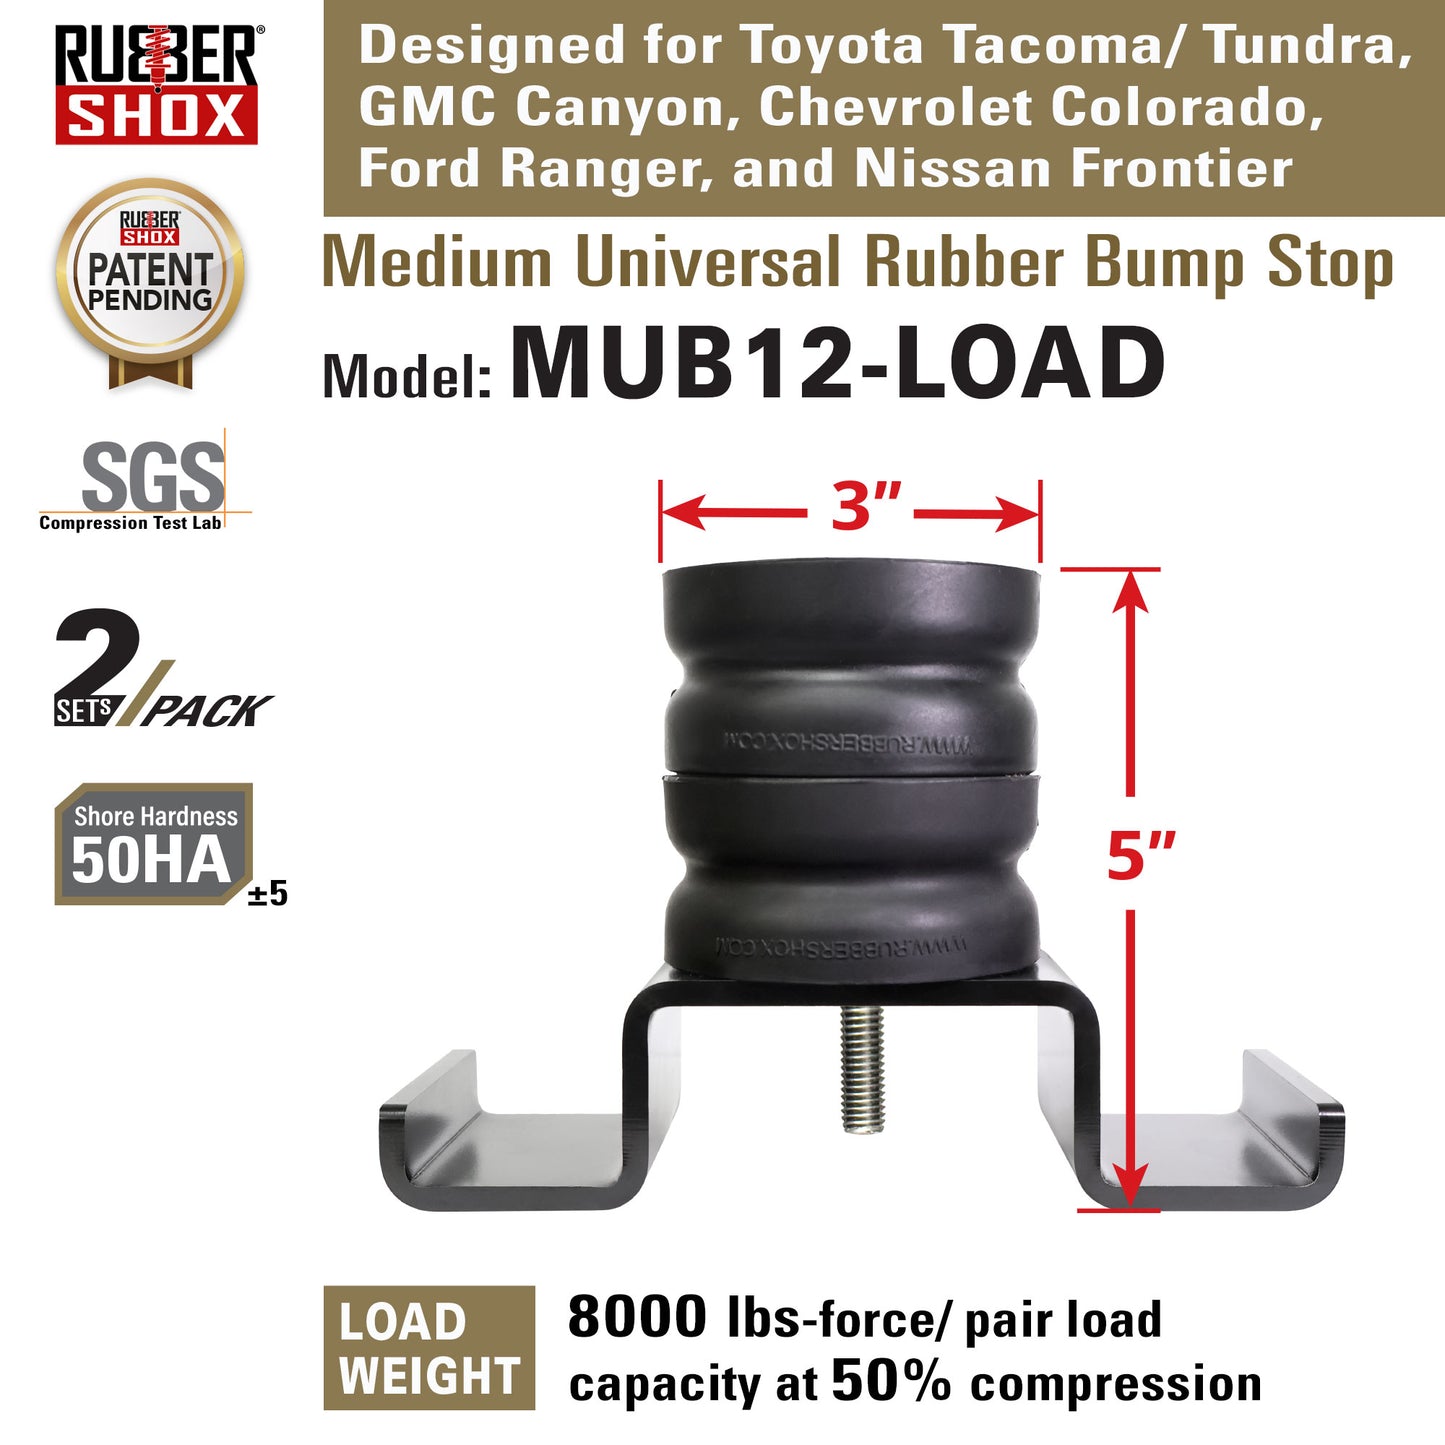 Medium Universal Rubber Bump Stop - MUB12-LOAD for Toyota Tacoma, Nissan Frontier, Chevrolet Colorado, Ford Ranger, GMC Canyon